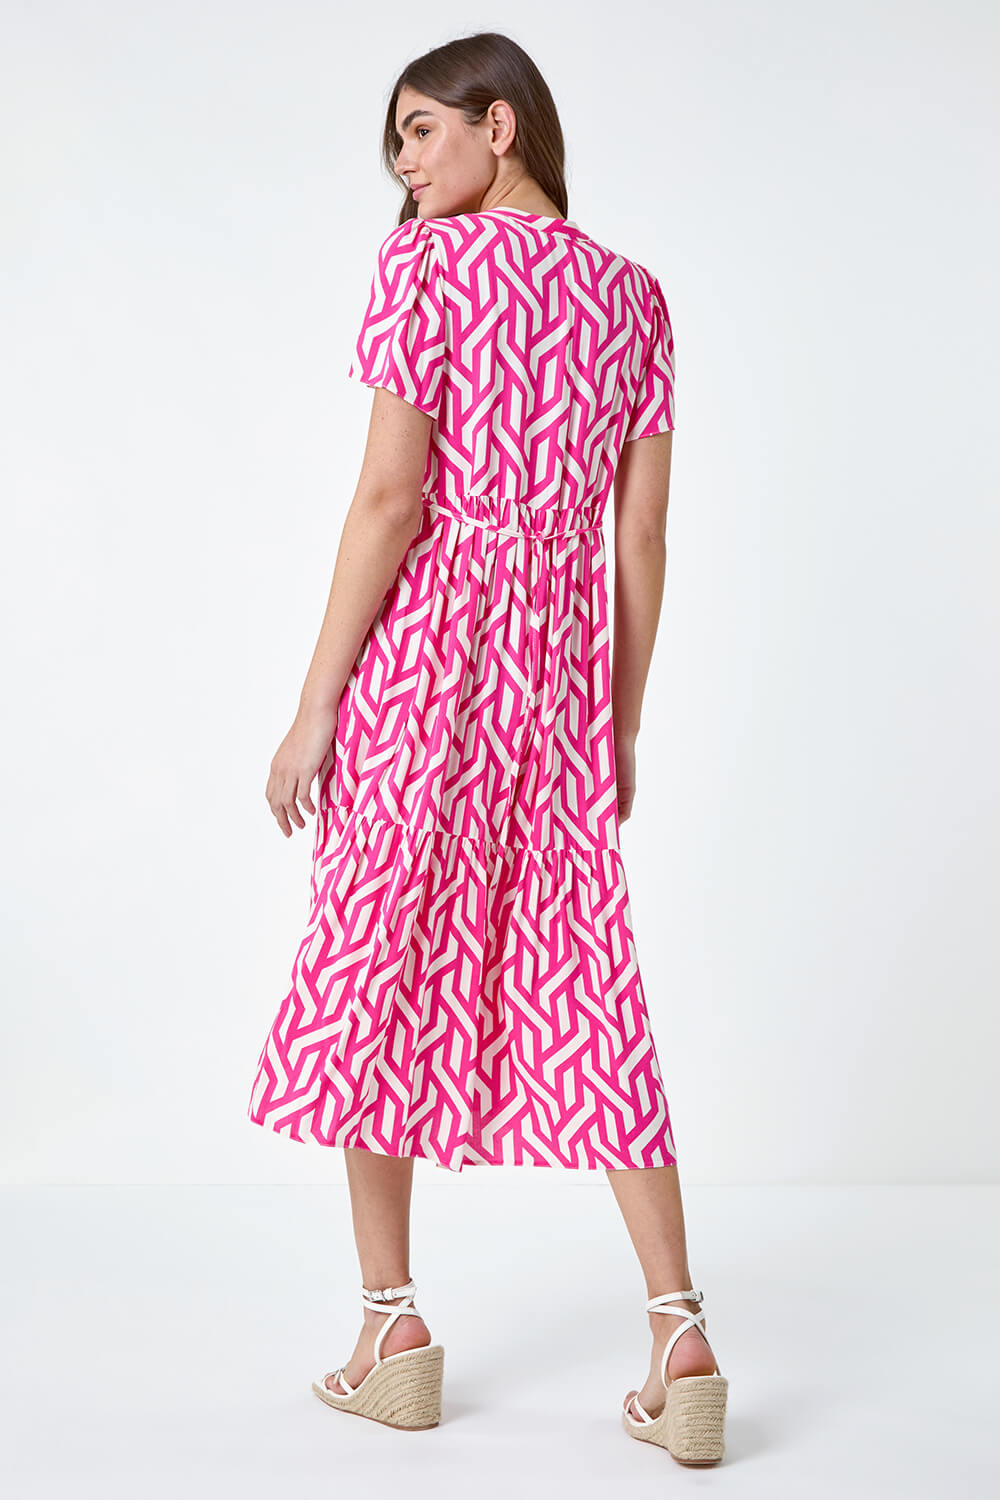 PINK Geometric Print Tiered Midi Dress, Image 3 of 5